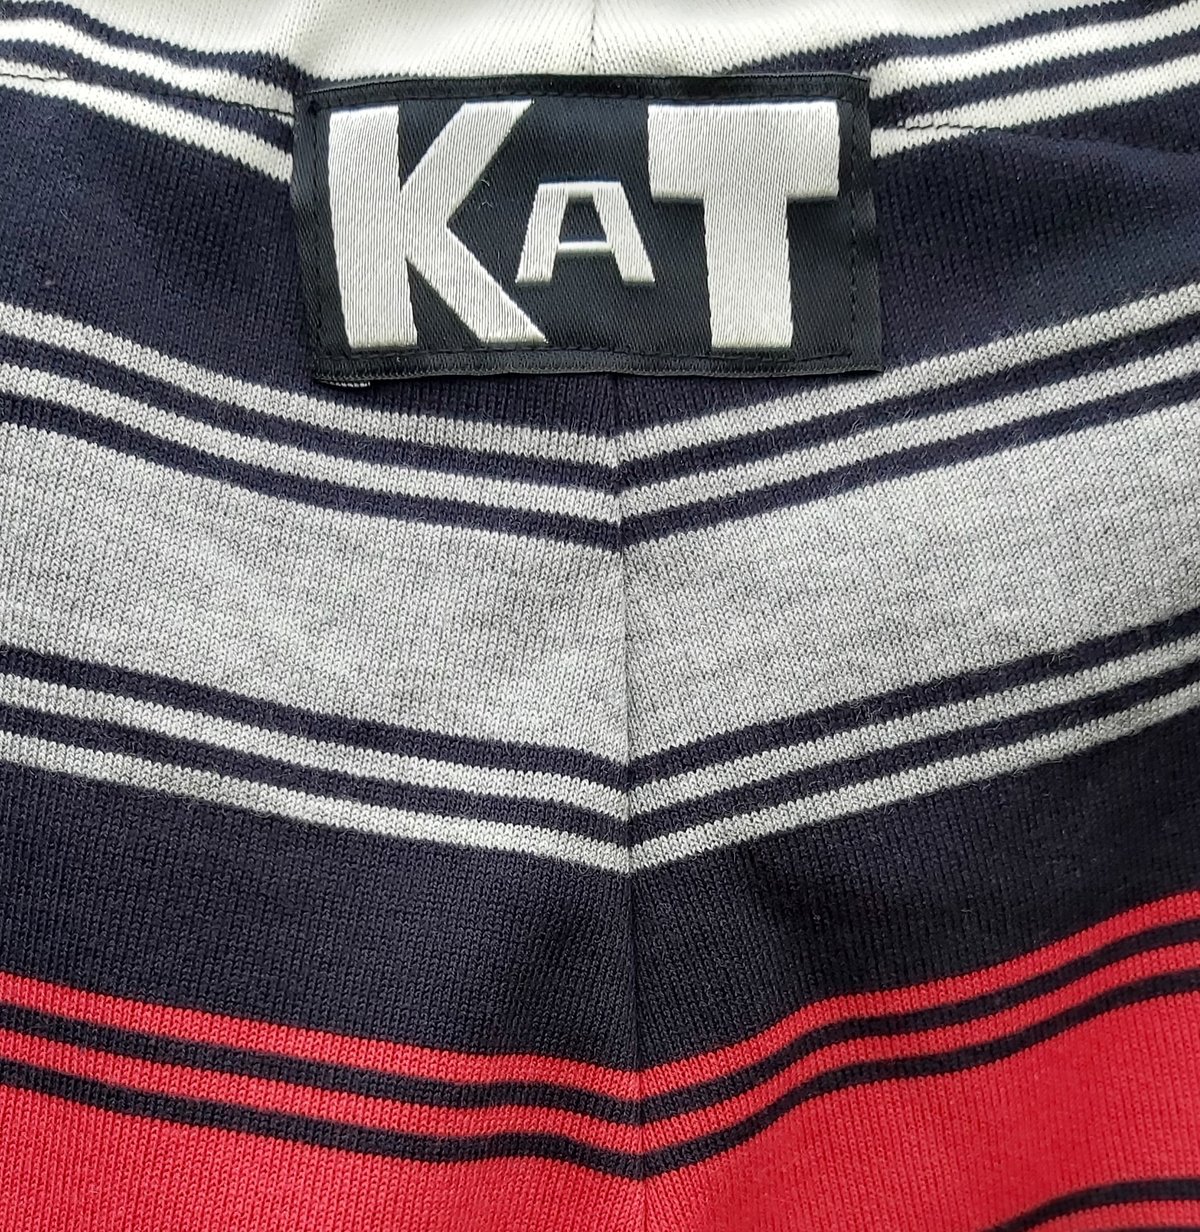 Image of Stripe pants - red/navy/grey/white